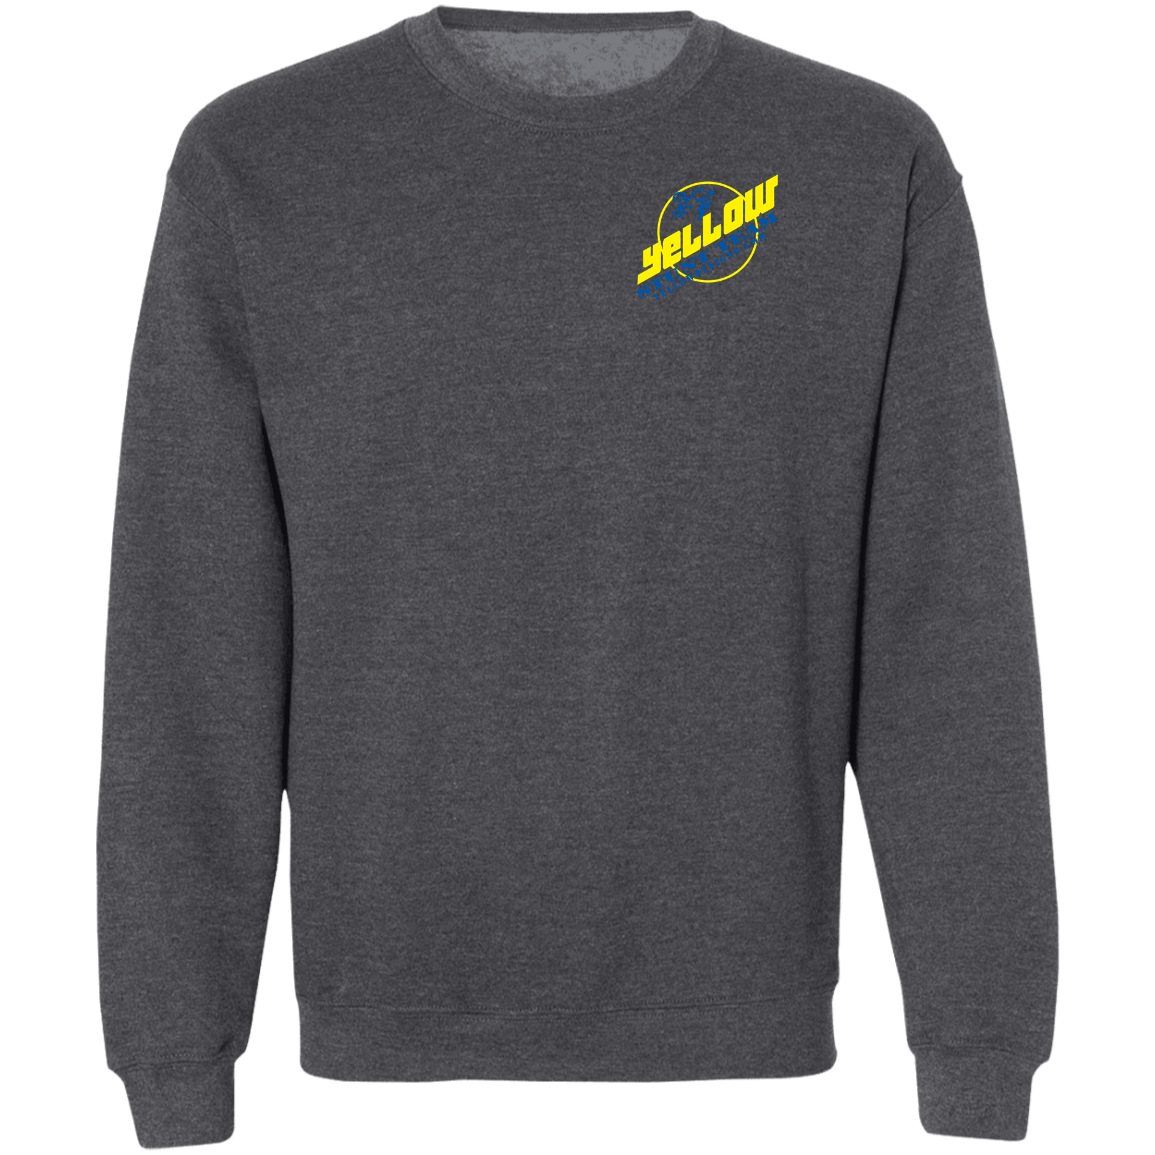 G180 Crewneck Pullover Sweatshirt  8 oz.